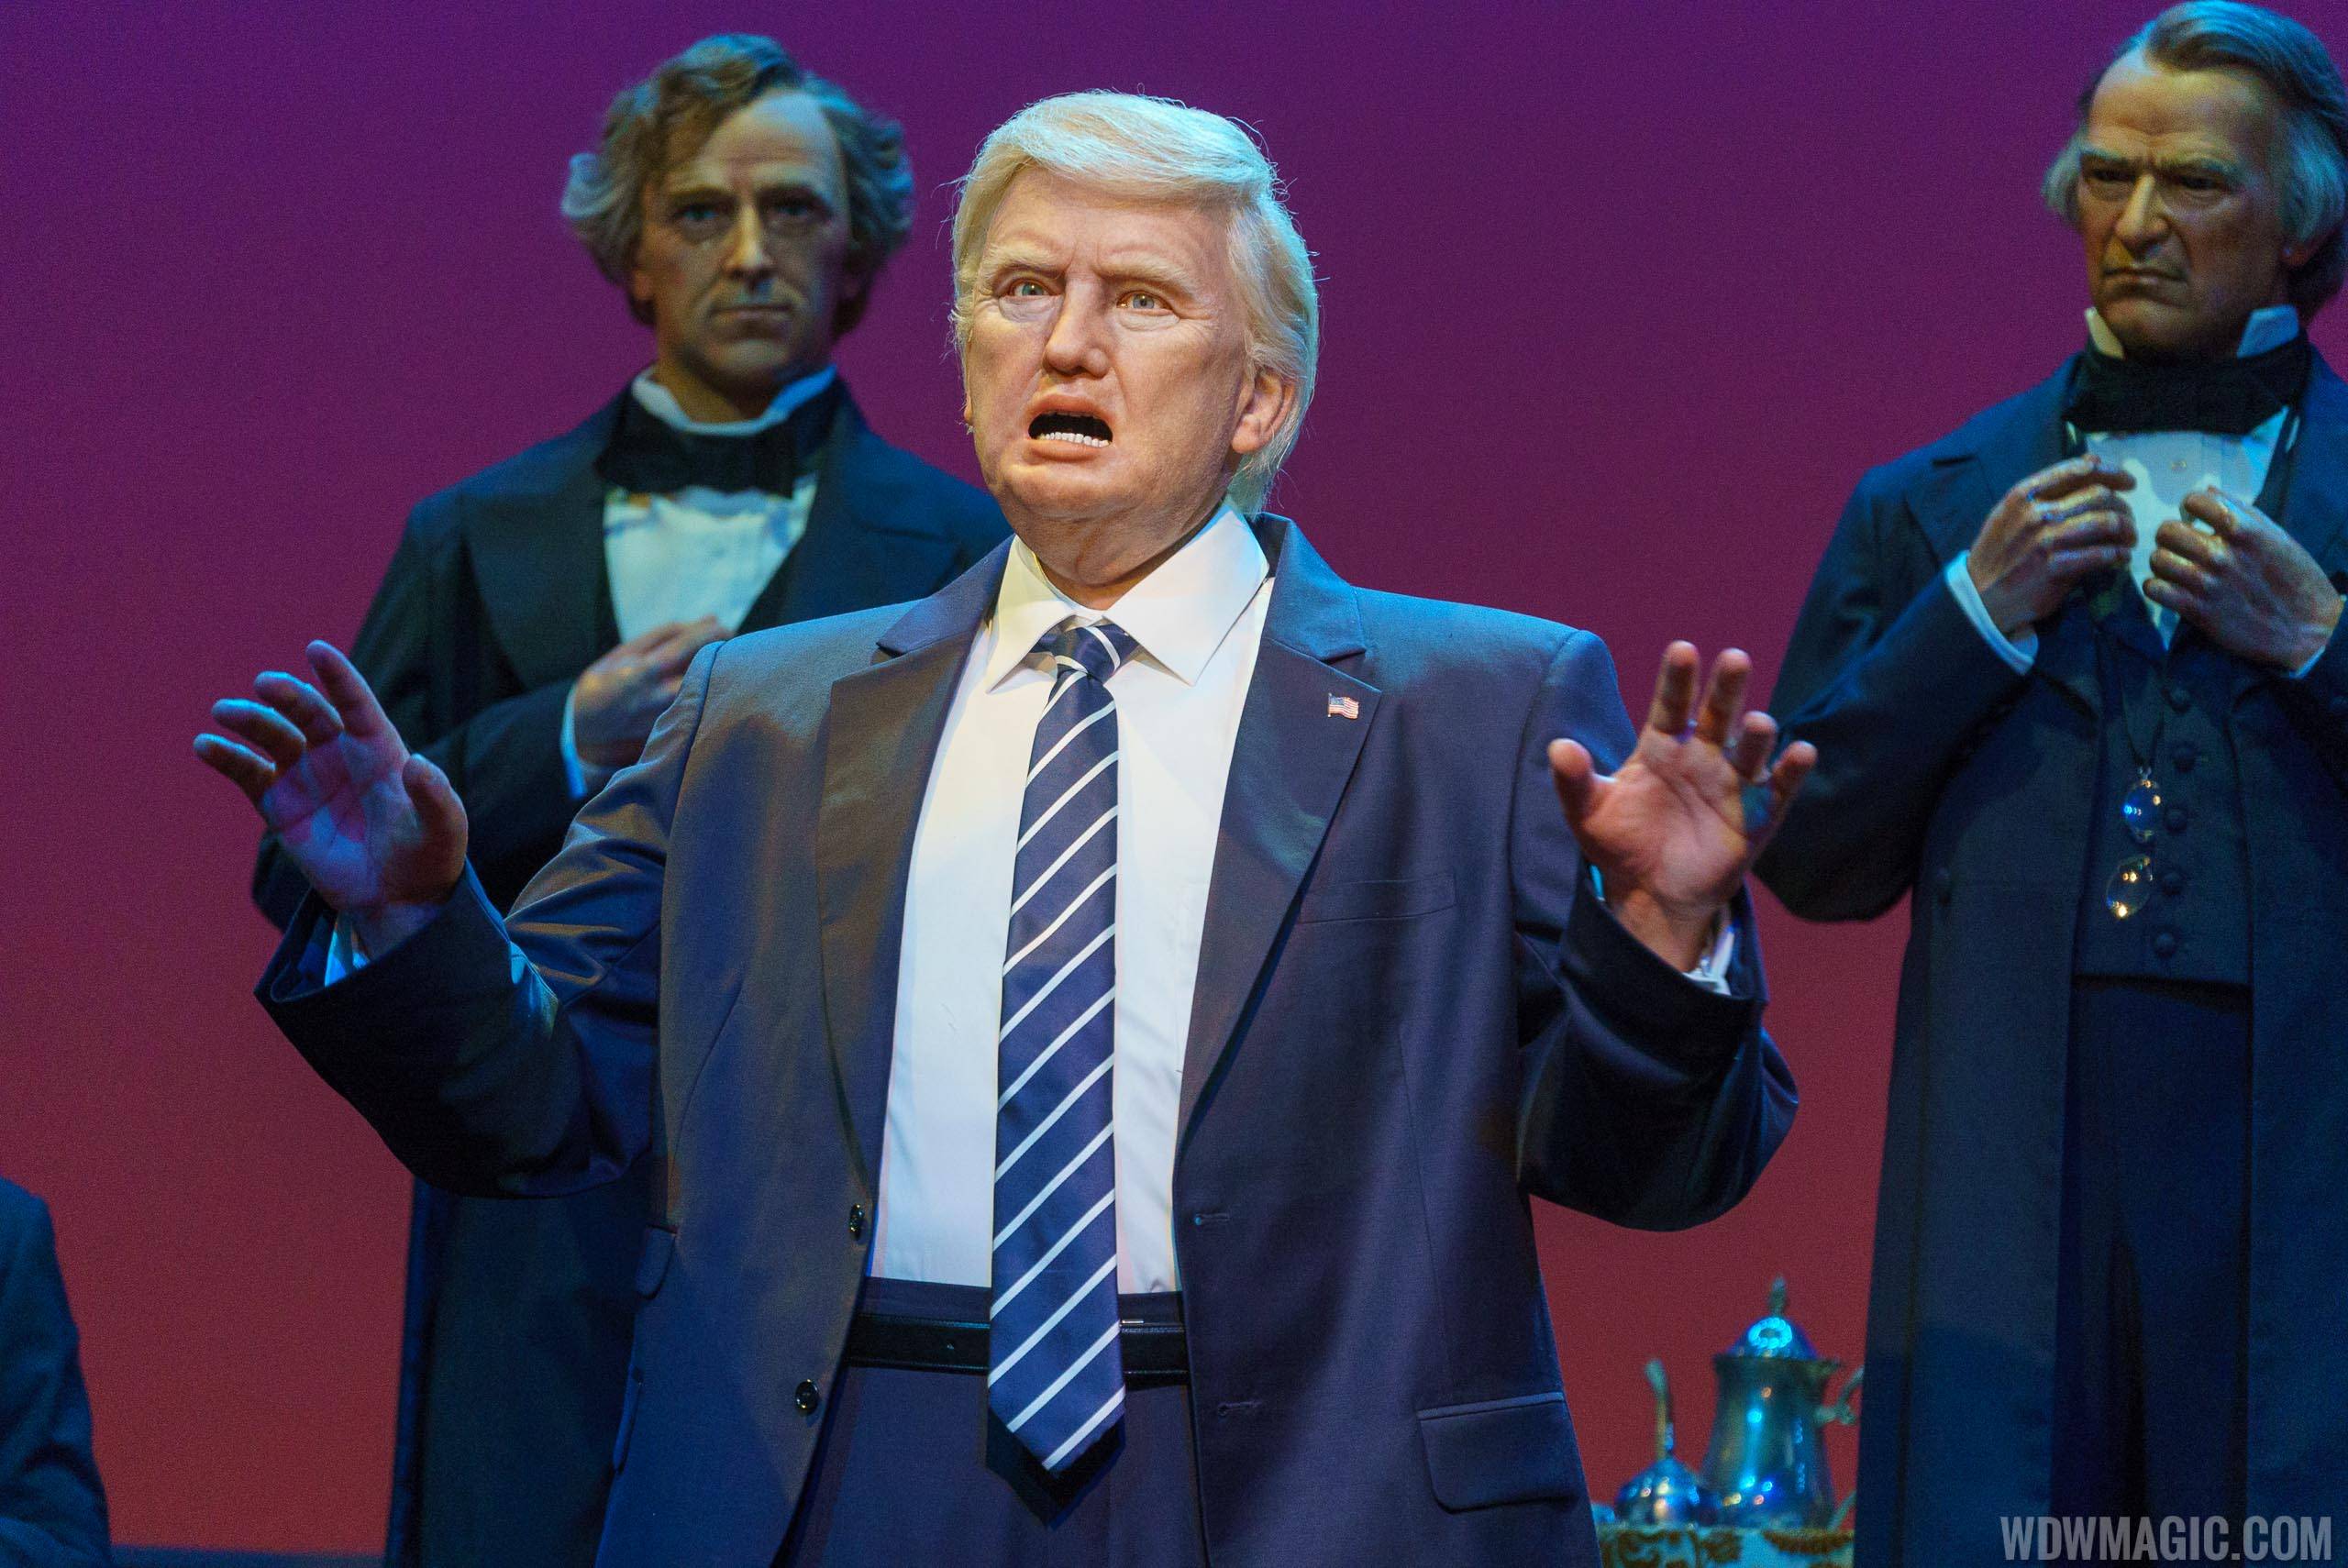 Donald Trump audio-animatronic figure